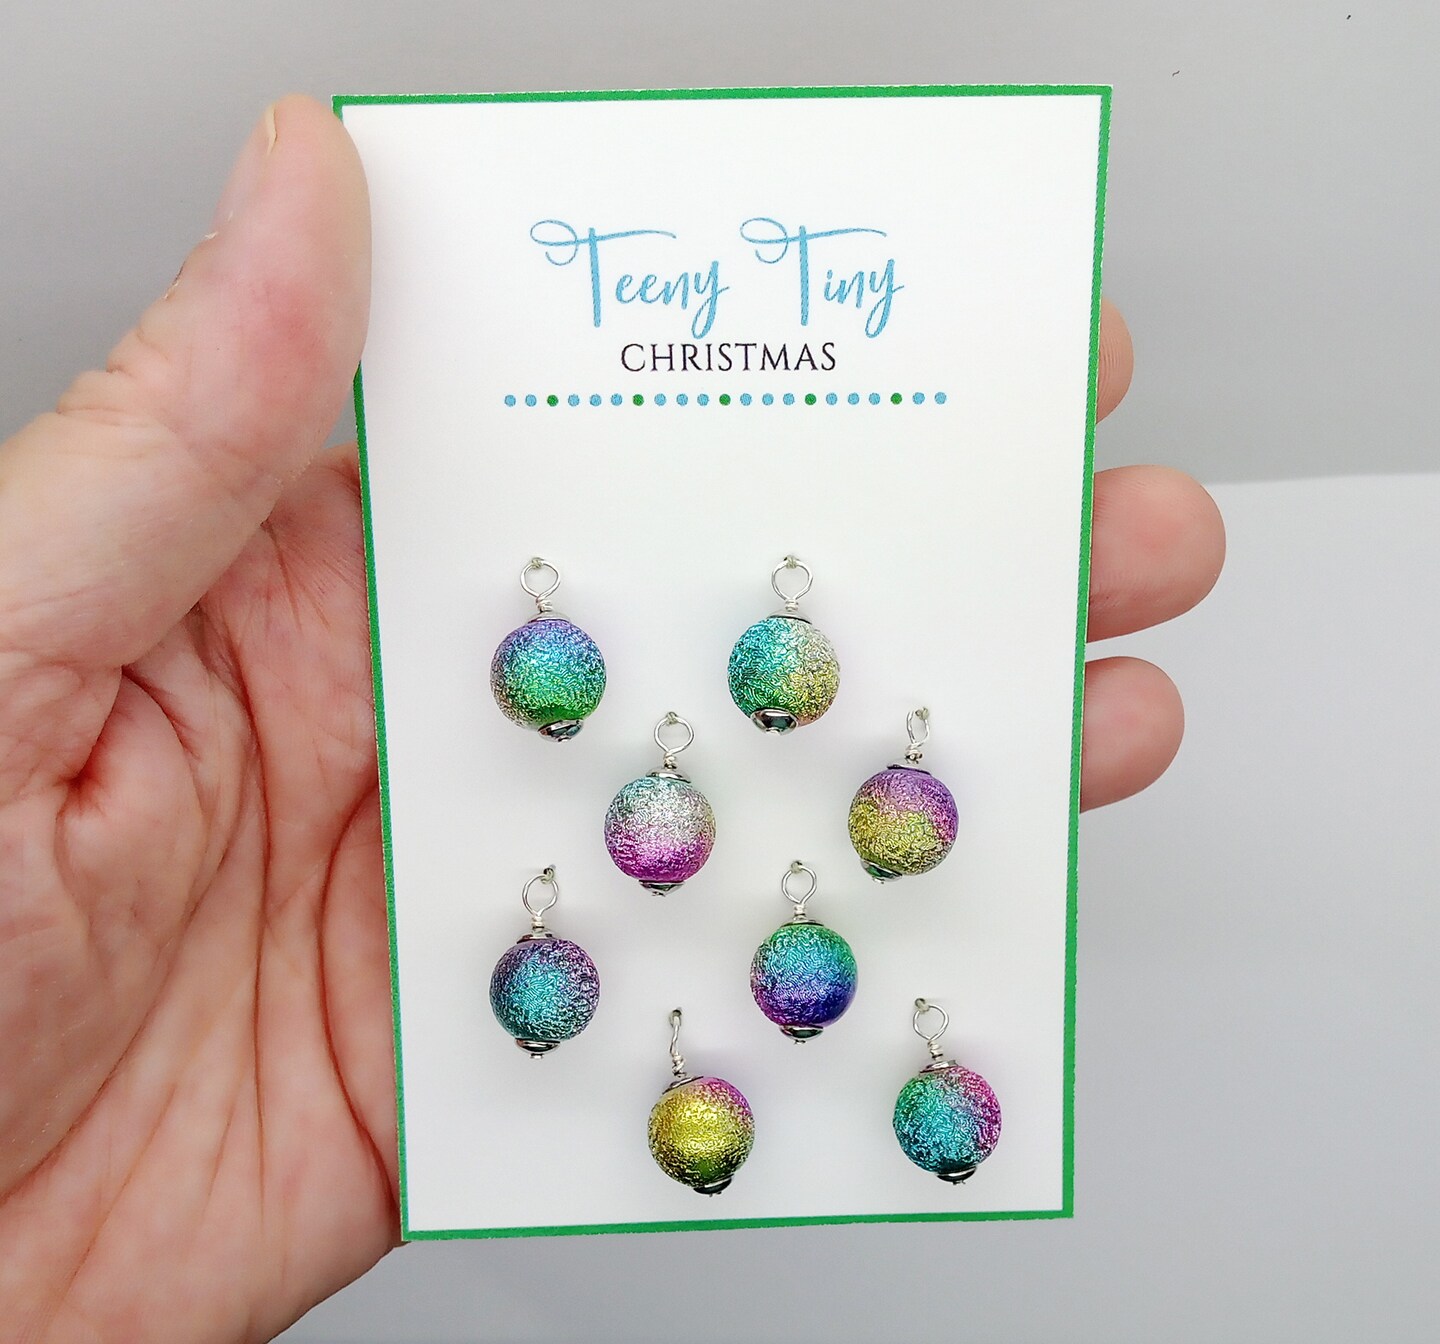 Rainbow Metallic Miniature Christmas Ornaments, Set of 8 pcs with Hooks for Mini Trees, Adorabilities